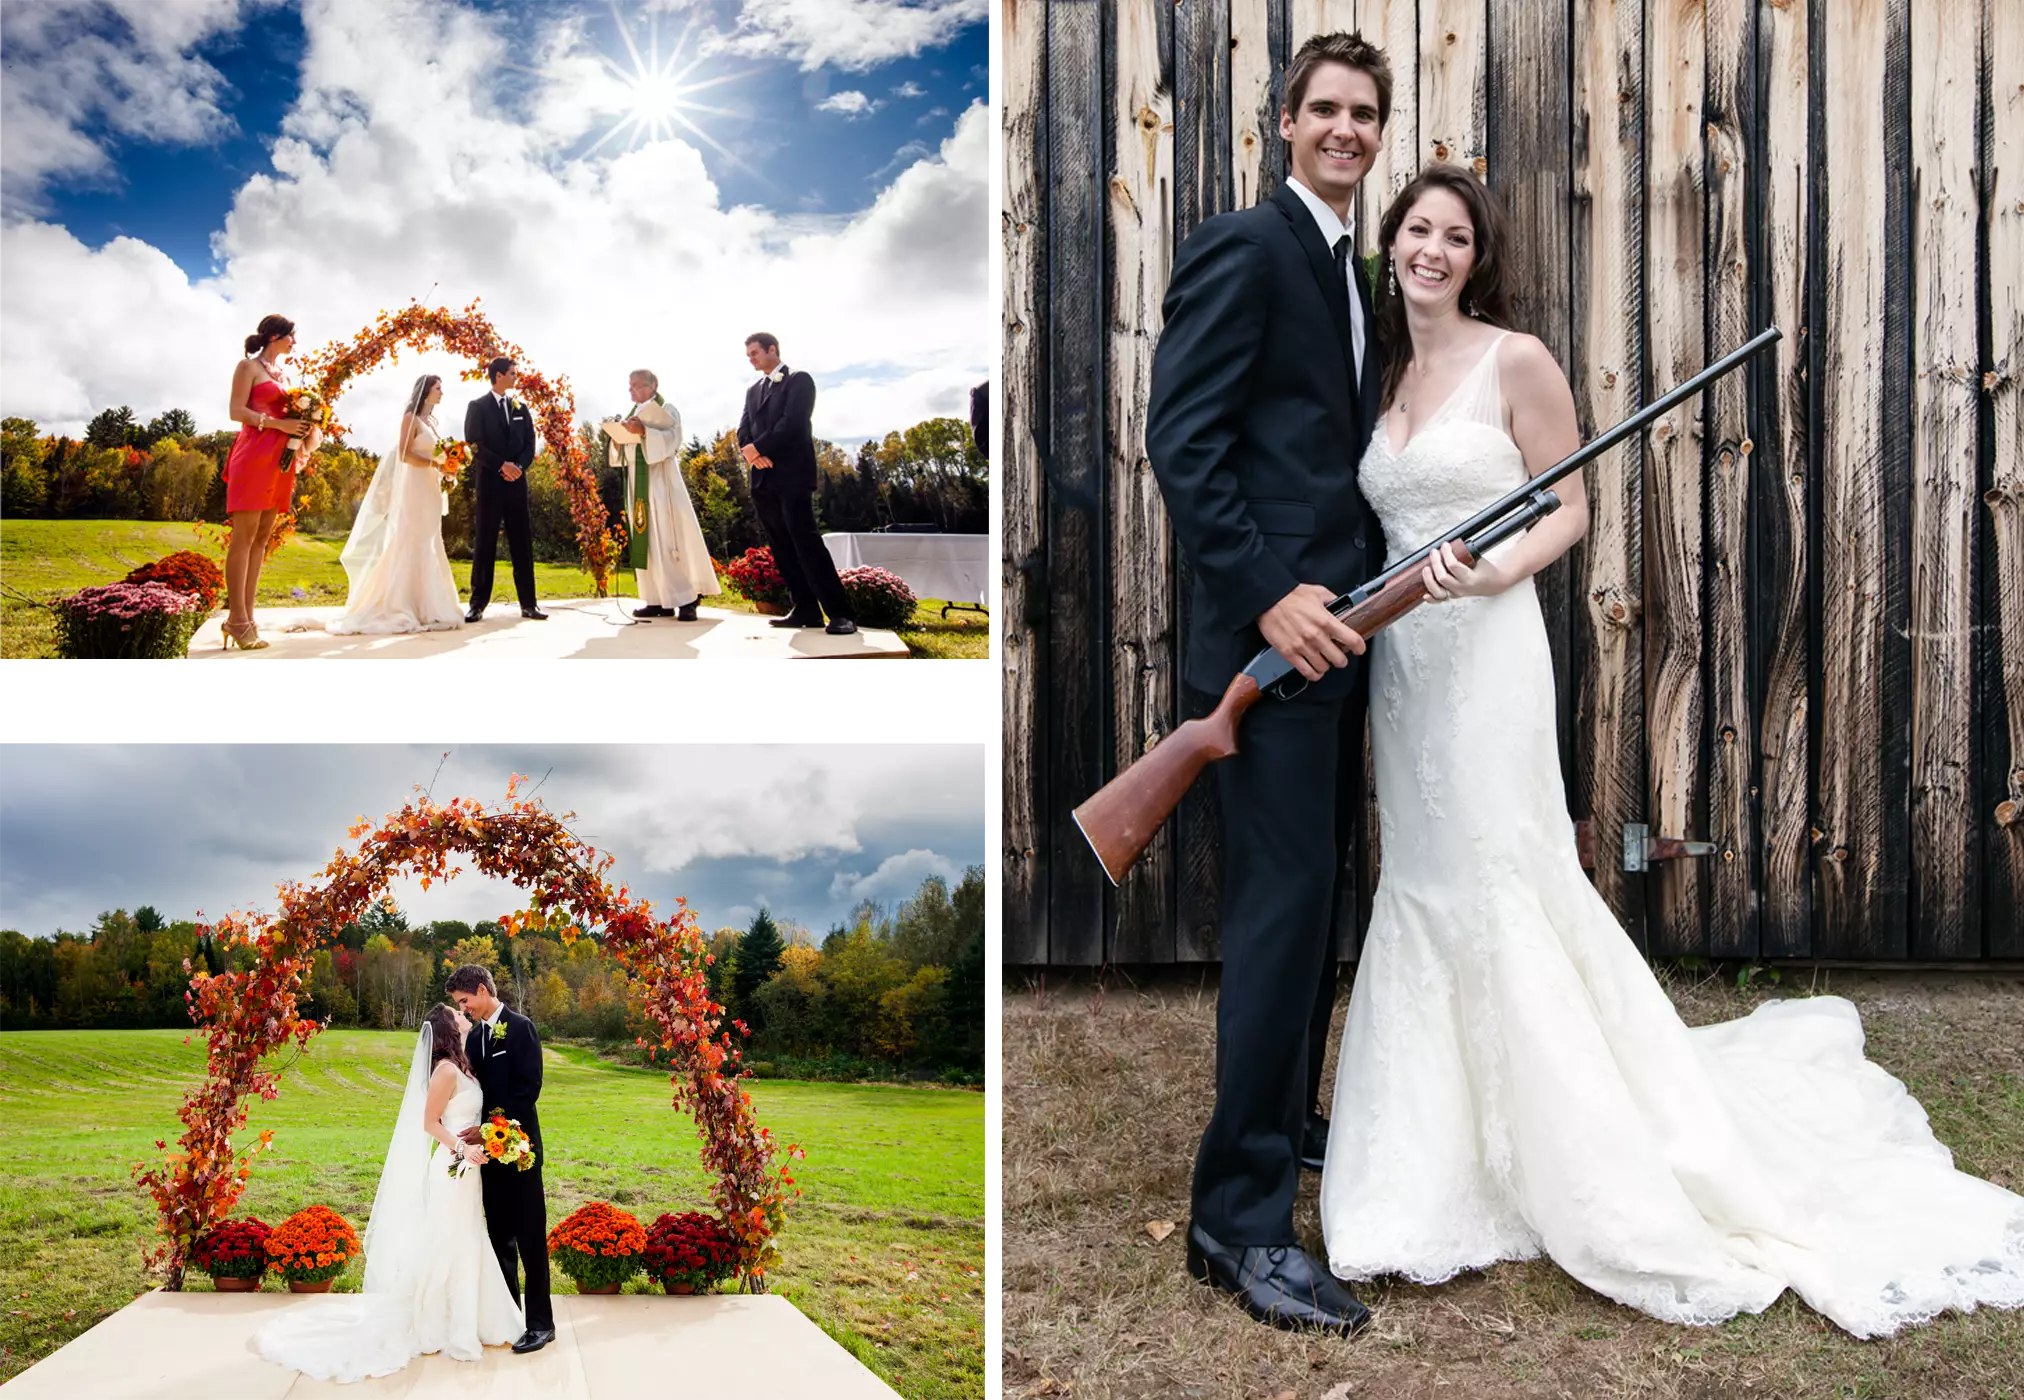 Countryside wedding photos by Jeffrey Meyer